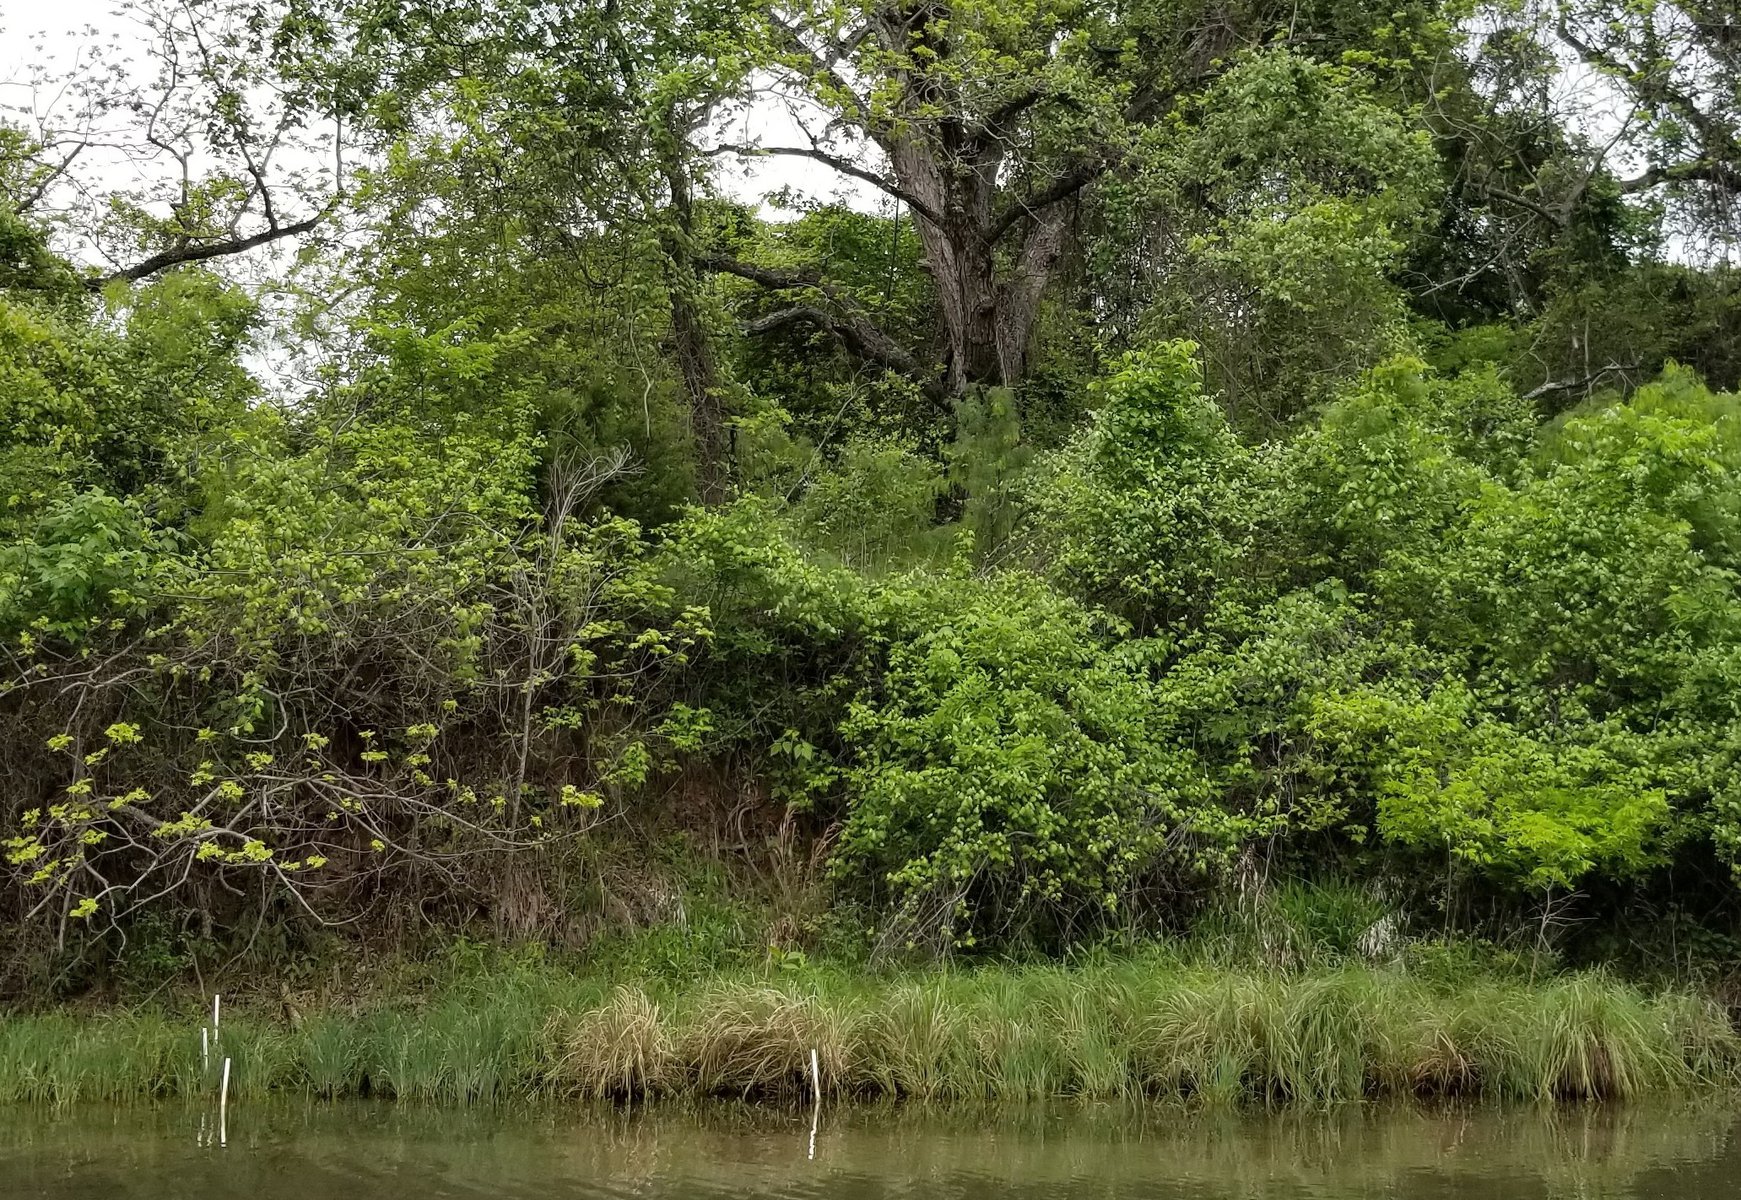 Green, restored shoreline in Austin